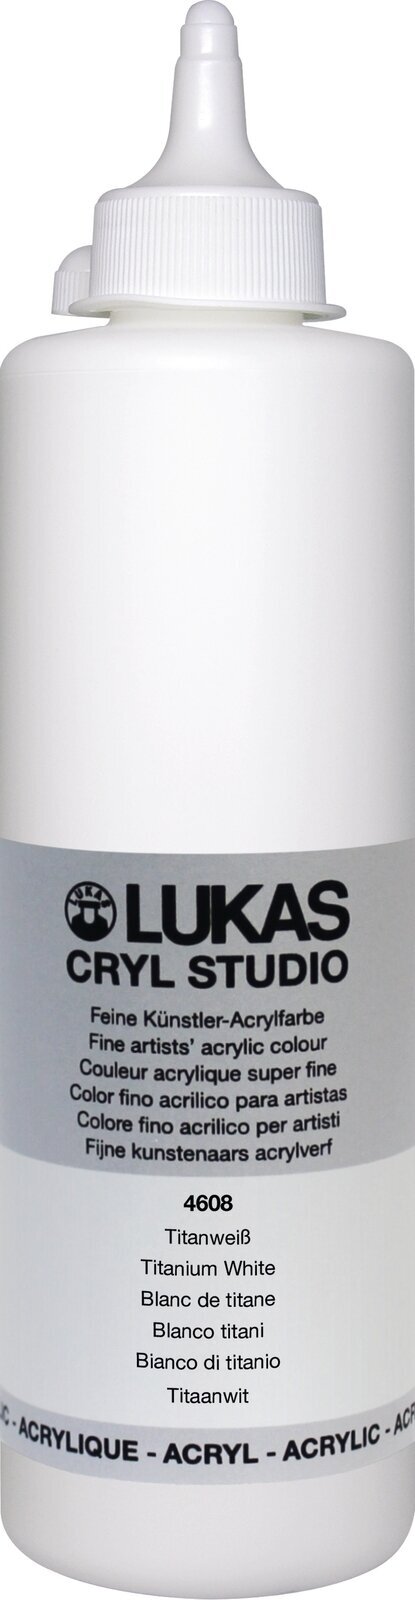 Akrylová barva Lukas Cryl Studio Plastic Bottle Akrylová barva Titanium White 500 ml 1 ks